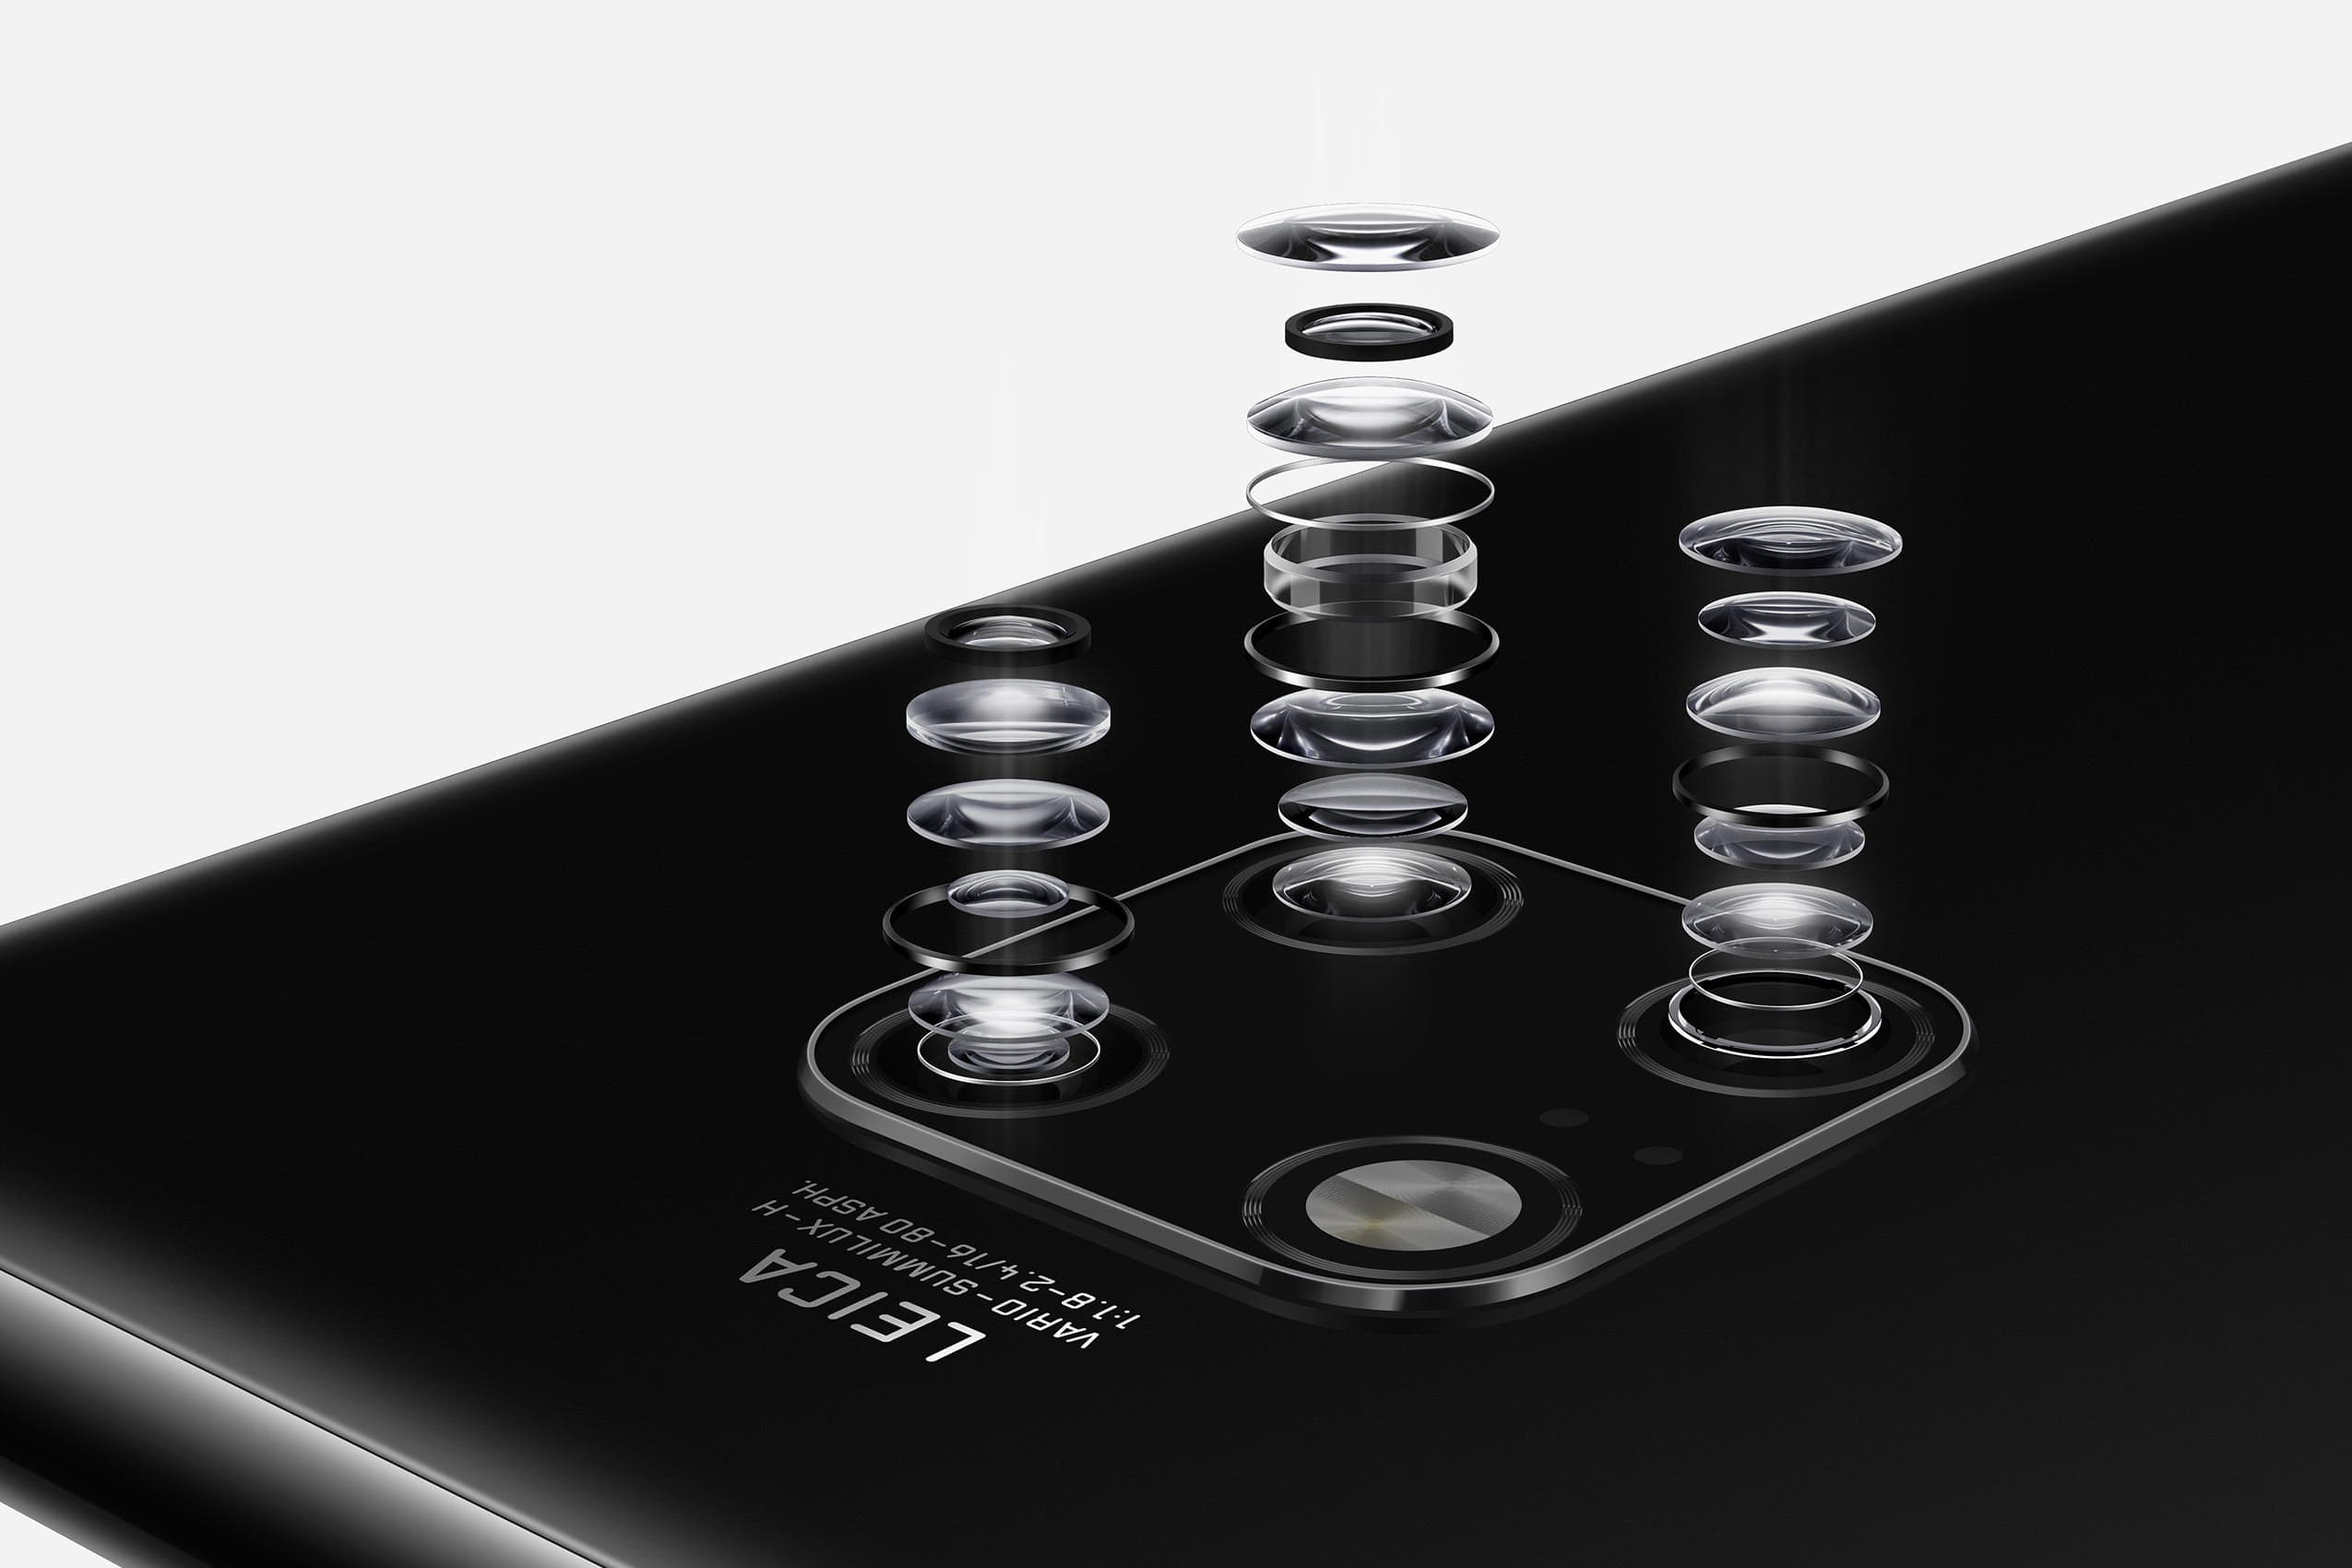 Huawei Mate 20 Pro lens design